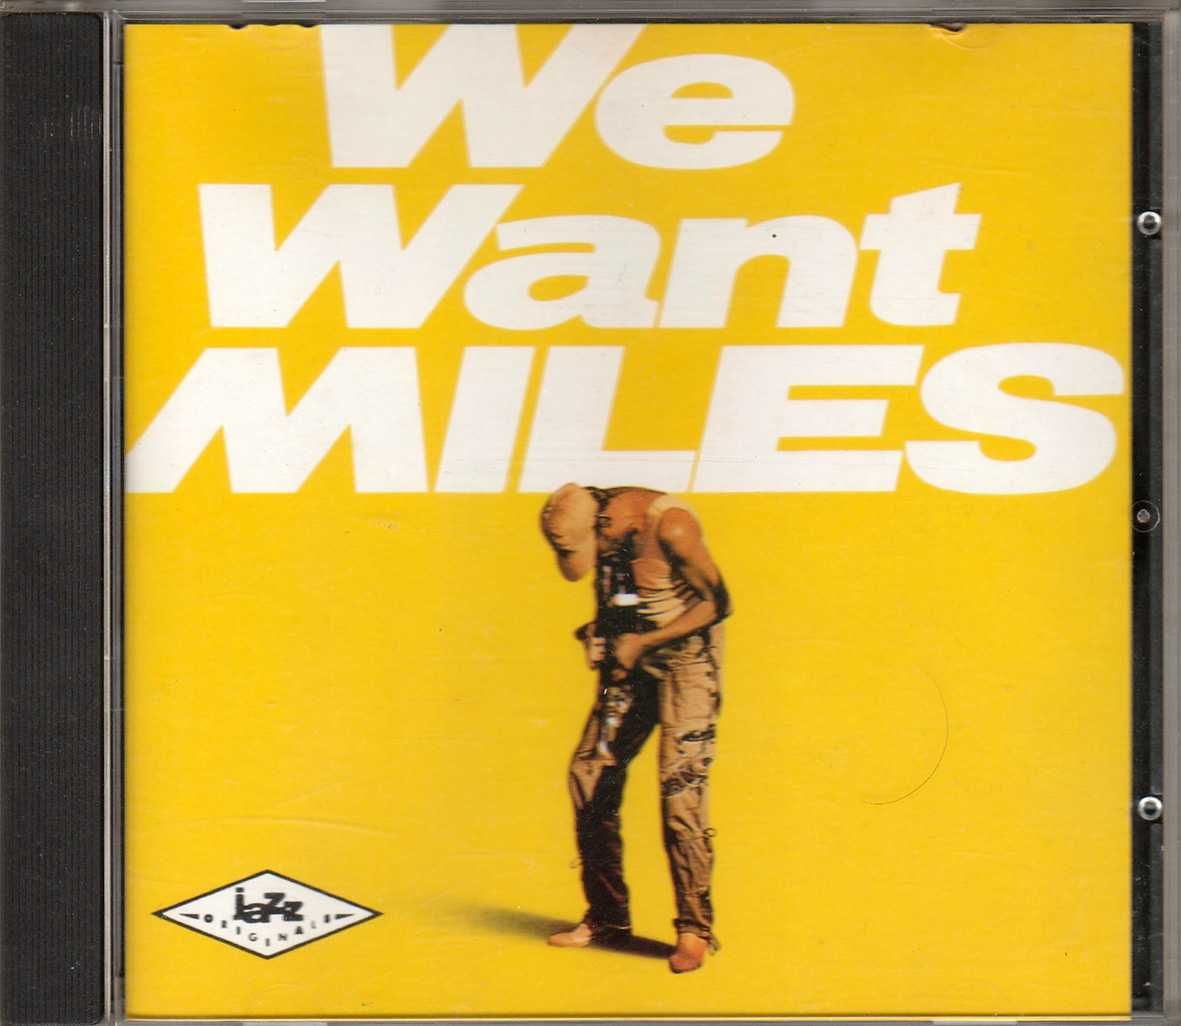 CD Miles Davis - We Want Miles